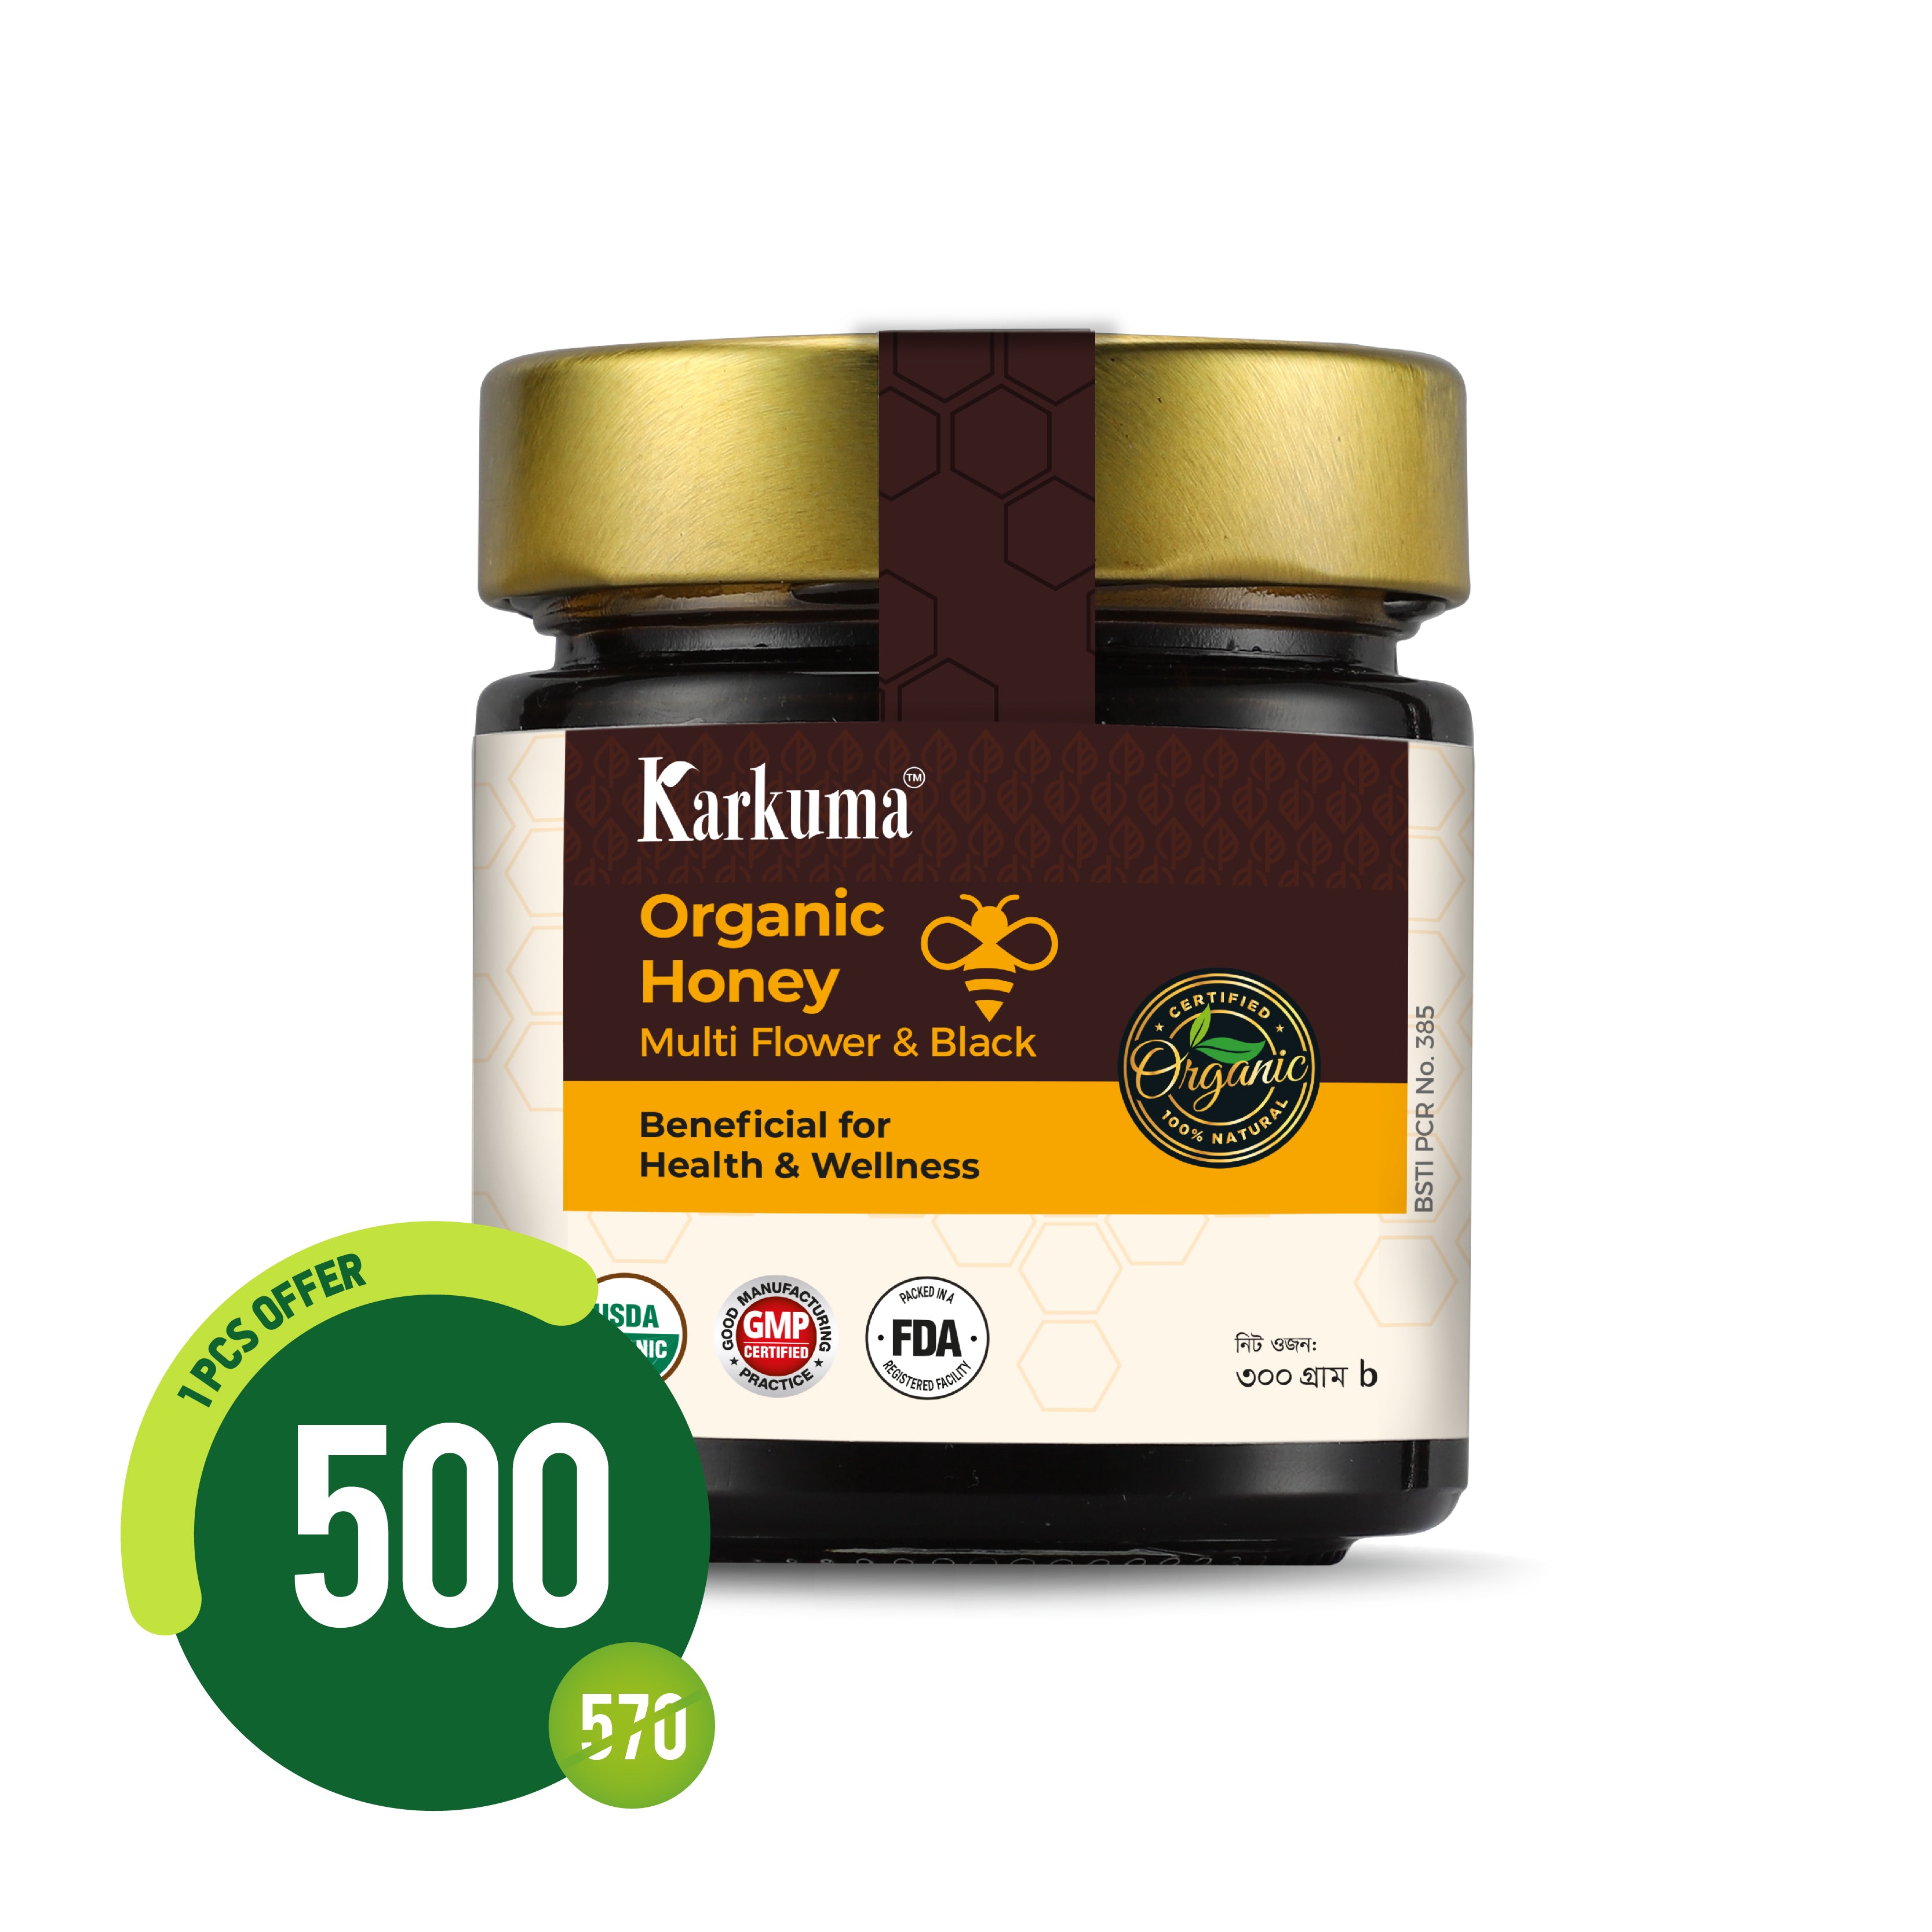 Karkuma Organic Honey 300g